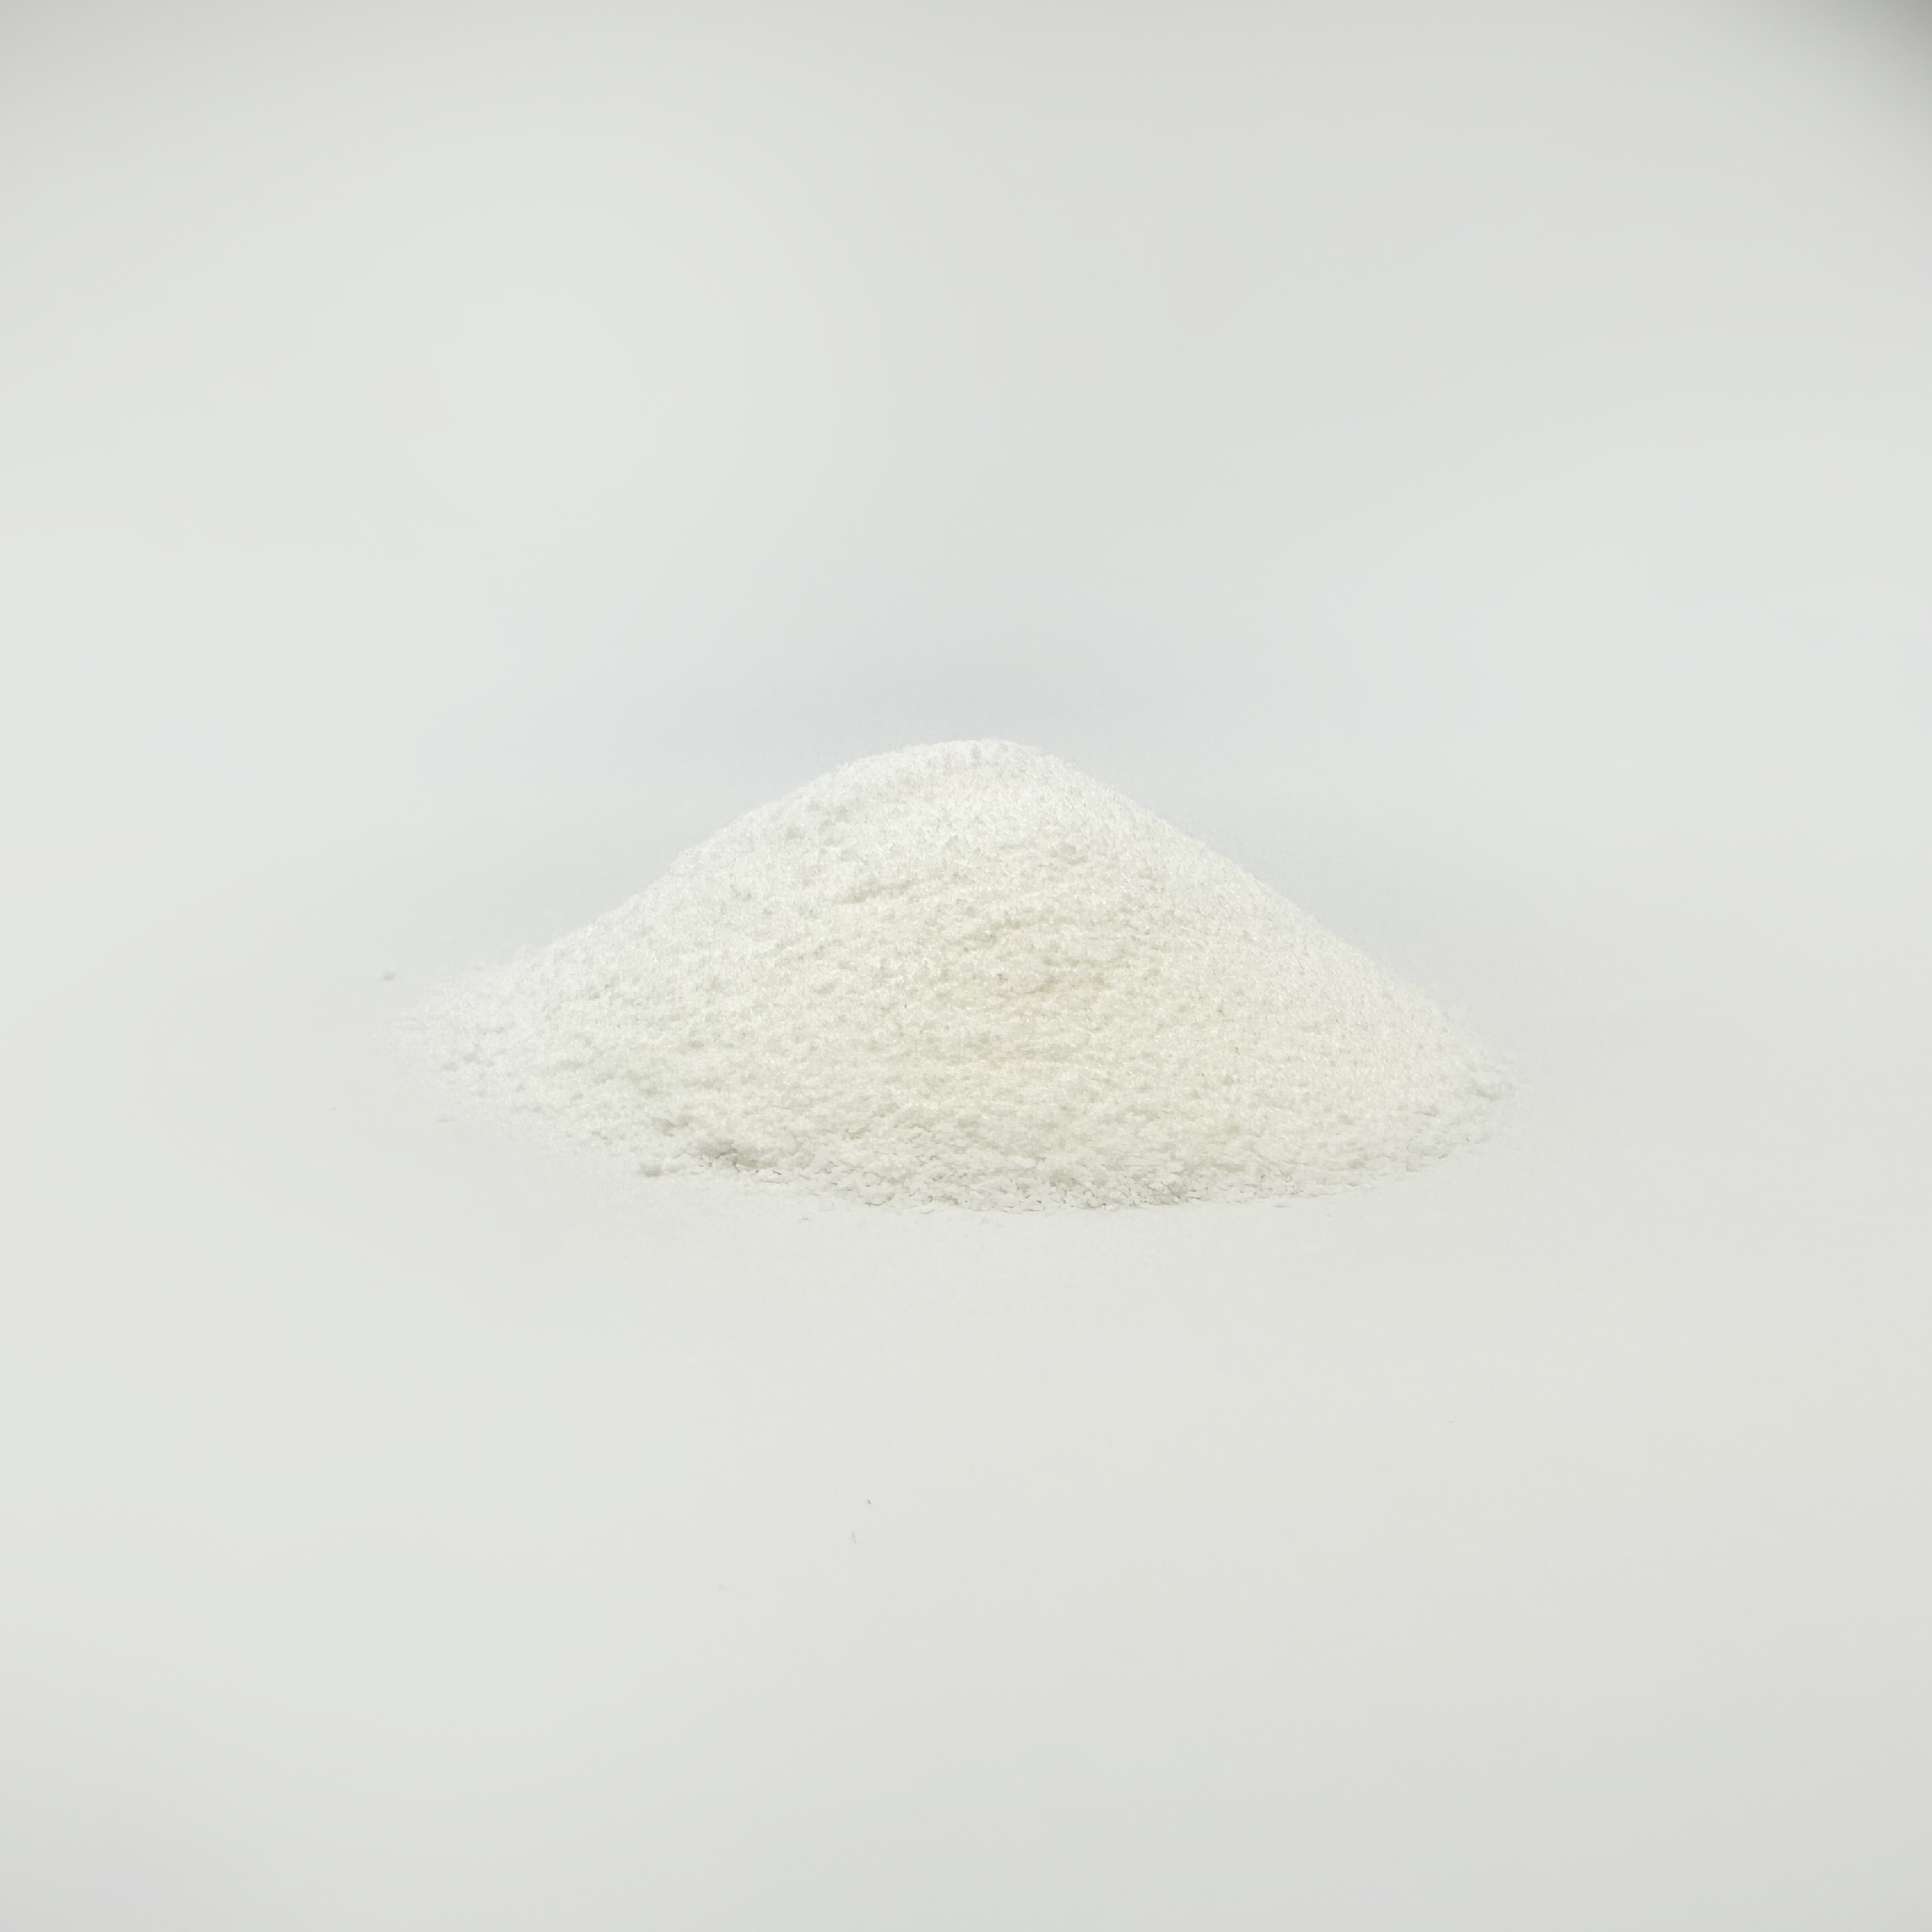 Sodium Lauryl Sulfoacetate (SLSA) (4 oz) by Pure Organic Ingredients Eco-Friendly Packaging Ideal Bath Bomb Additive Gentle on Skin Surfactant & L